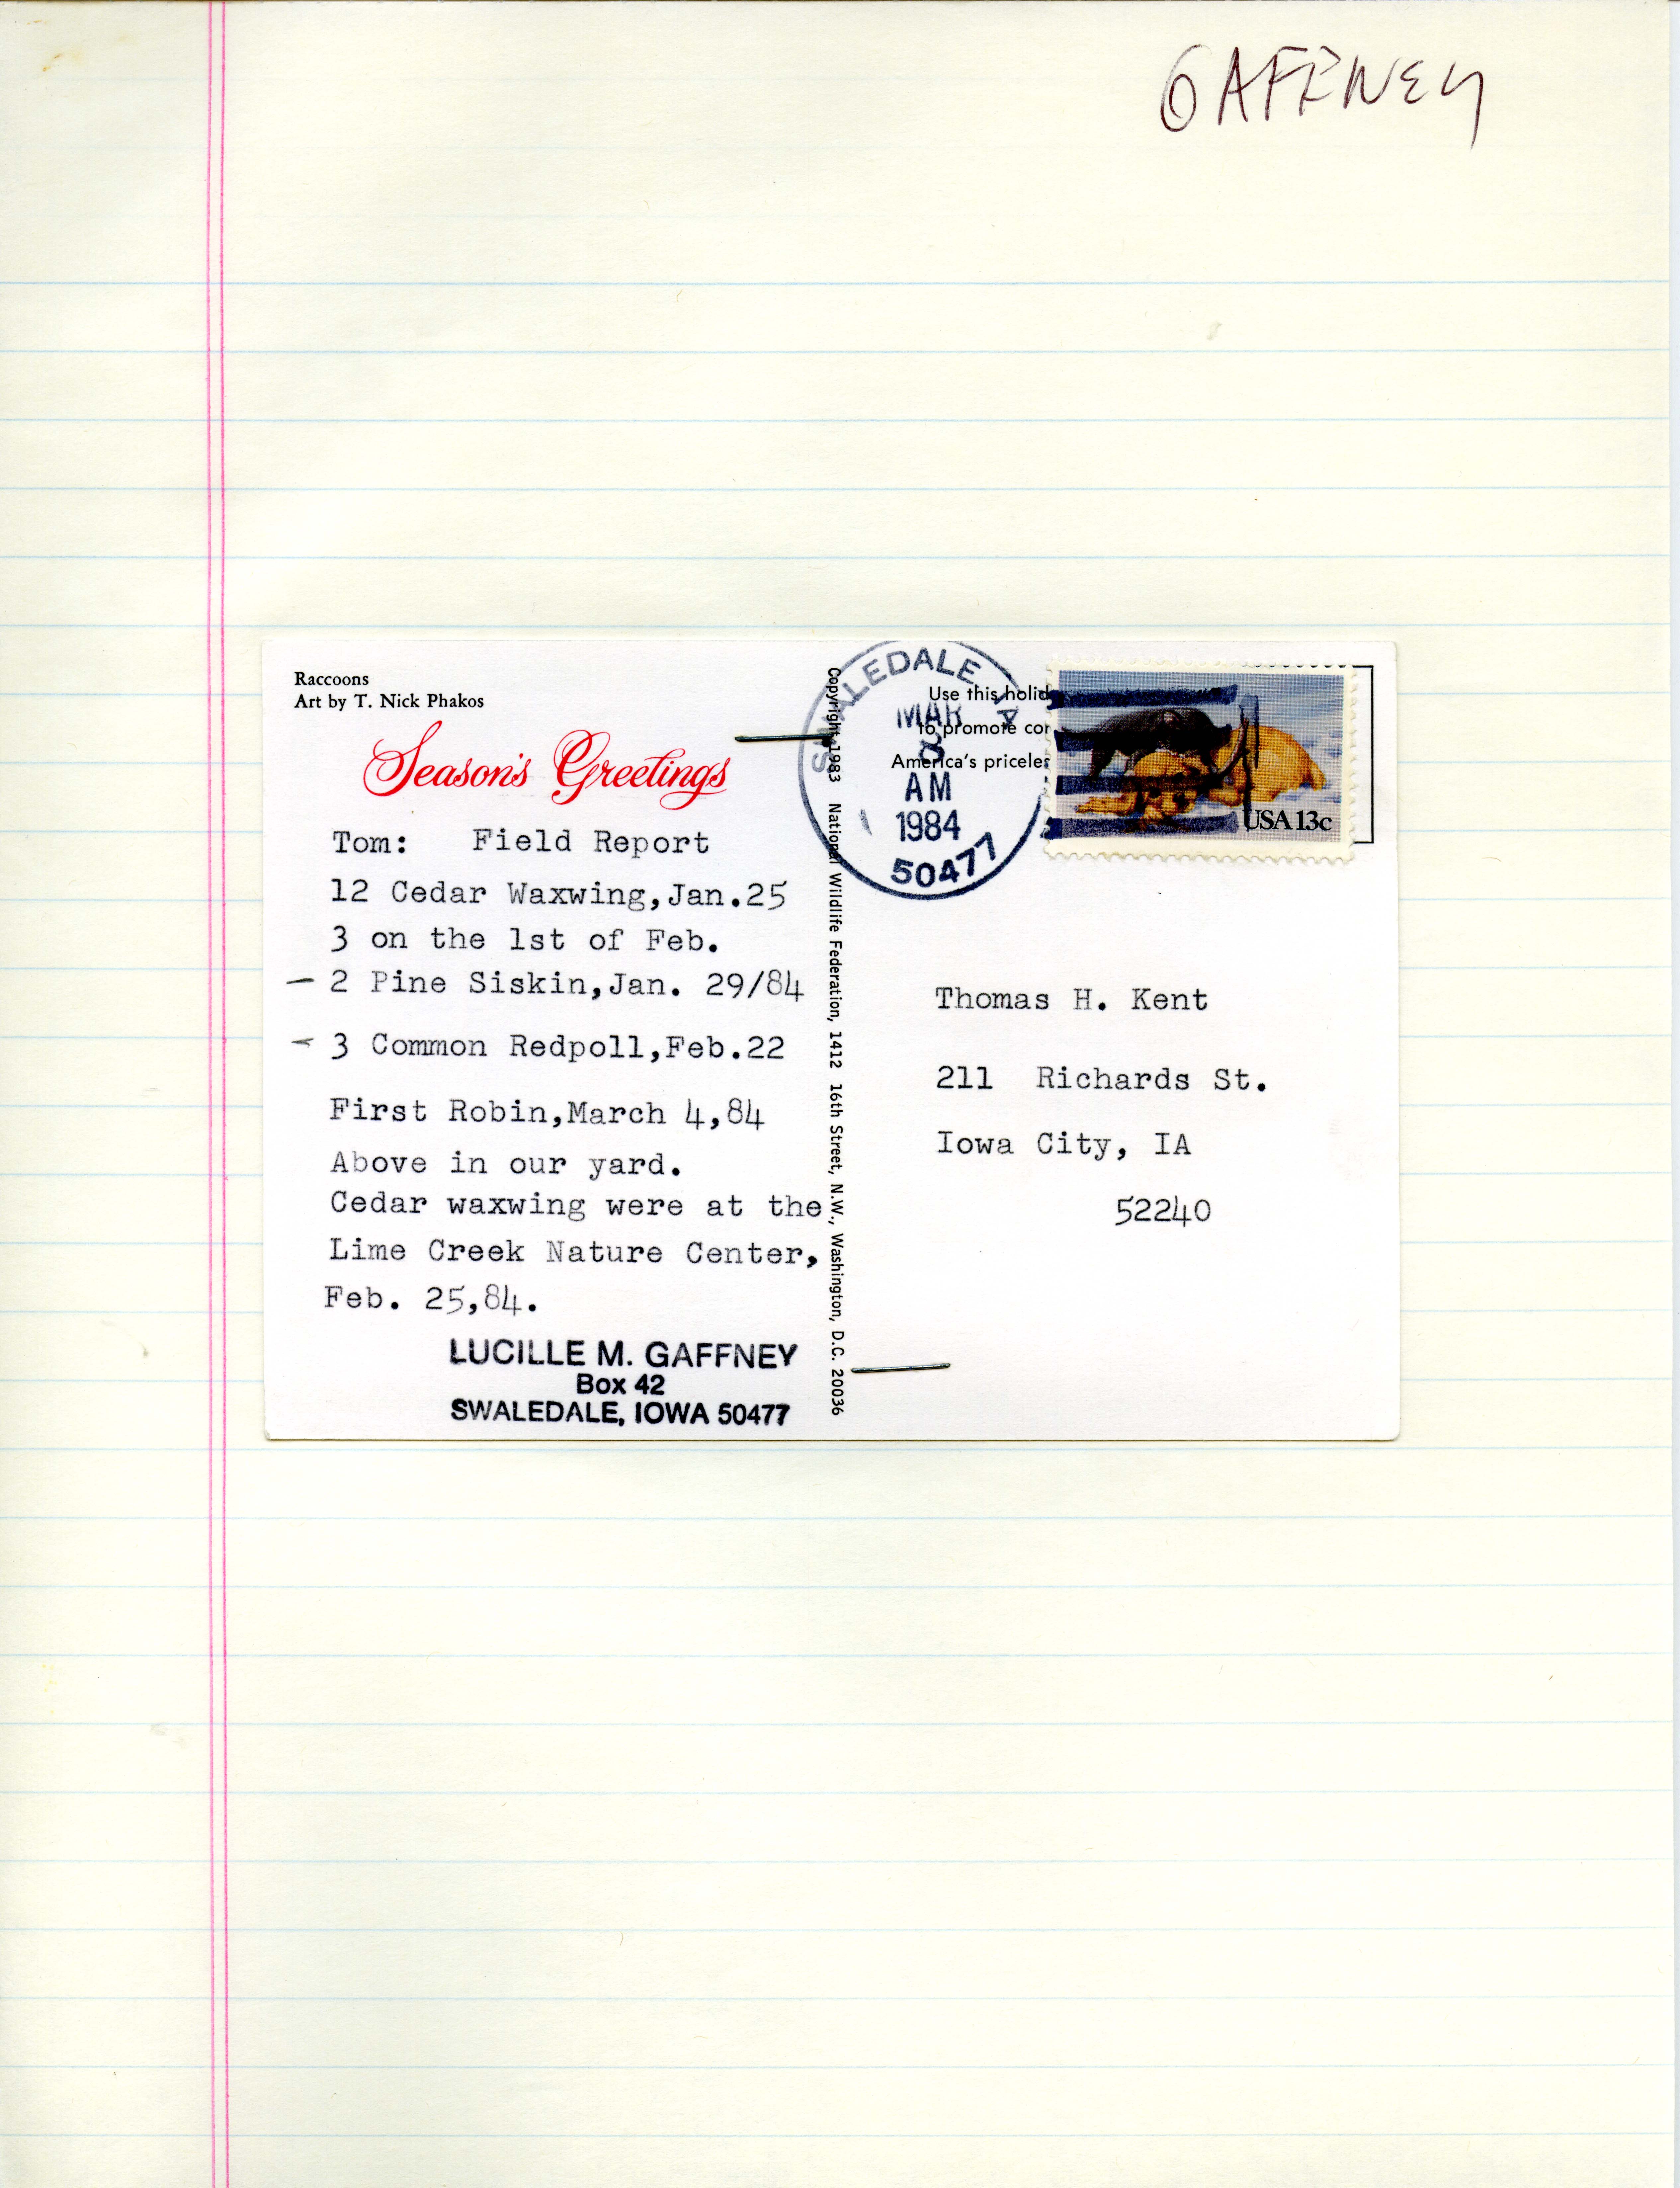 Lucille M. Gaffney postcard to Thomas H. Kent regarding birds sighted, March 8, 1984